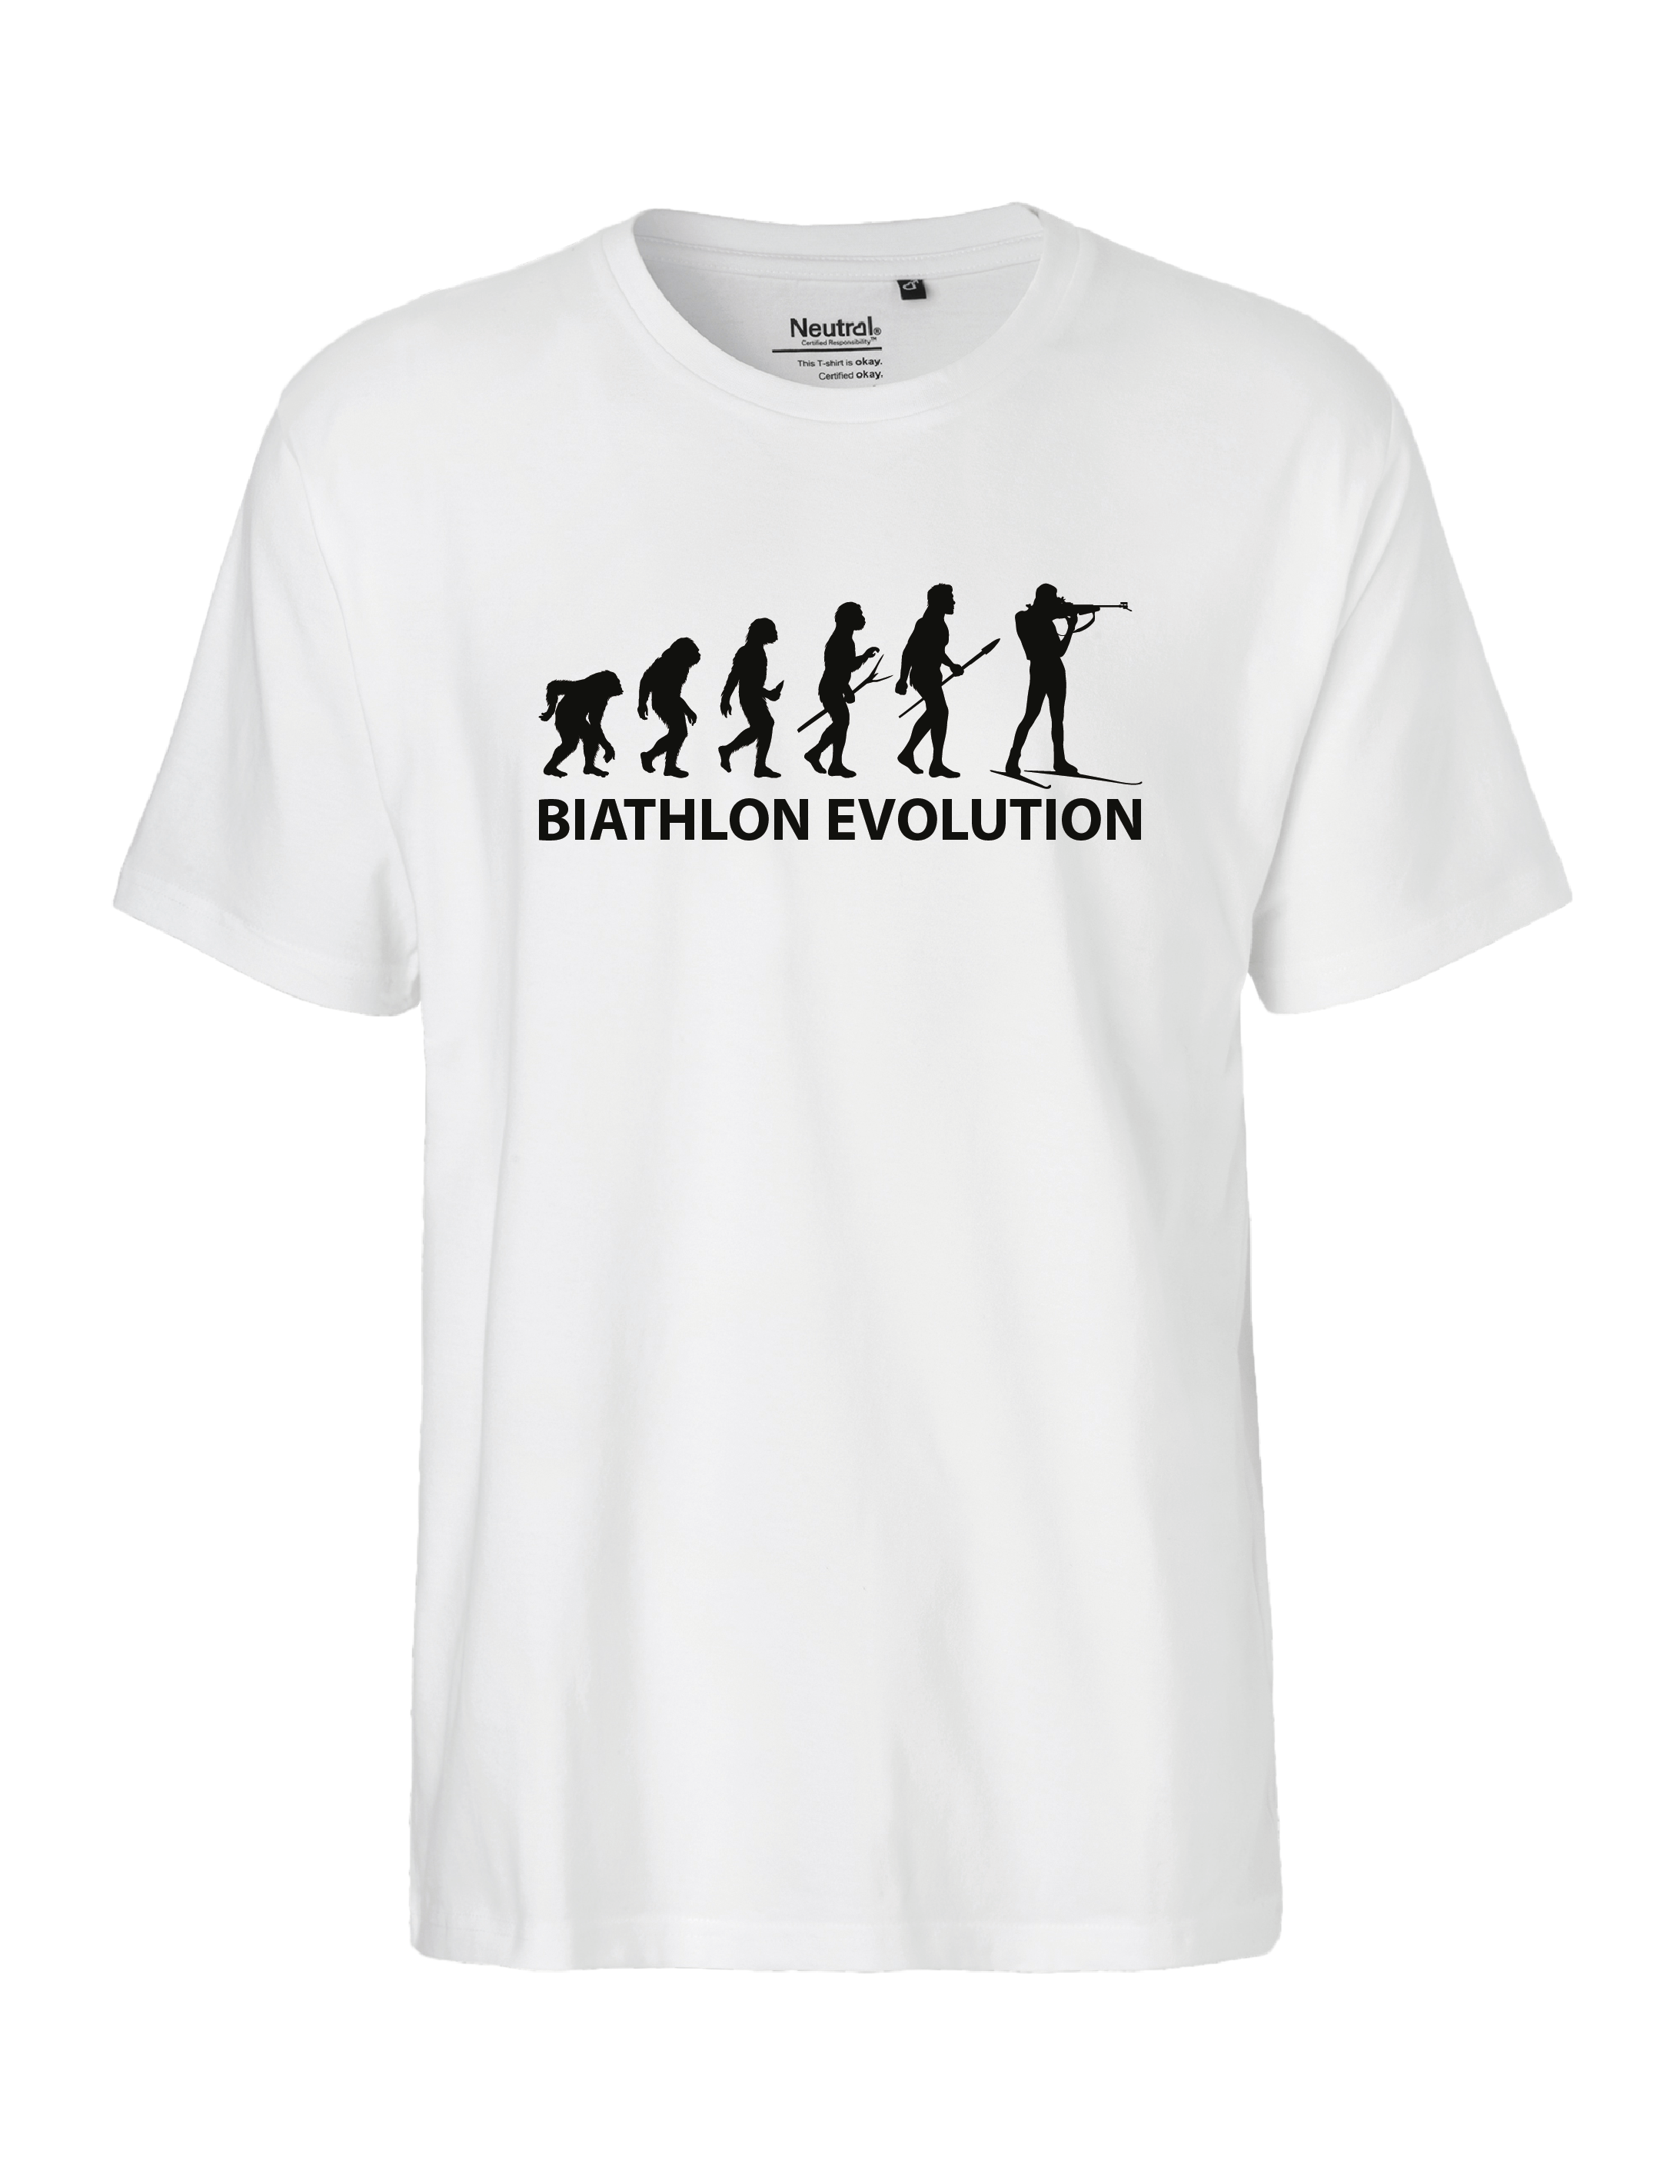 T-shirt White: BIATHLON EVOLUTION | T-shirts tryk